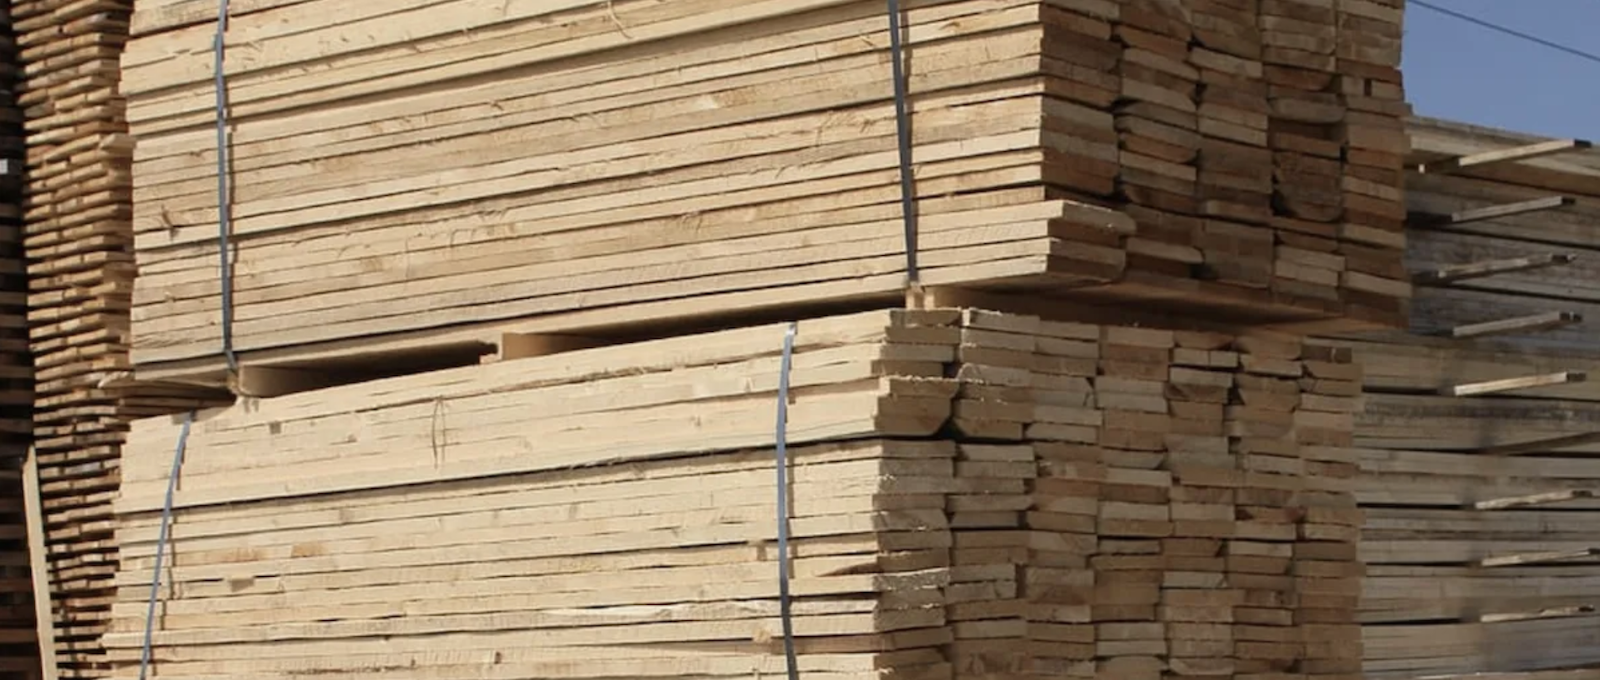 https://www.probuilder.com/sites/default/files/lumber-stacked-in-lumberyard.png